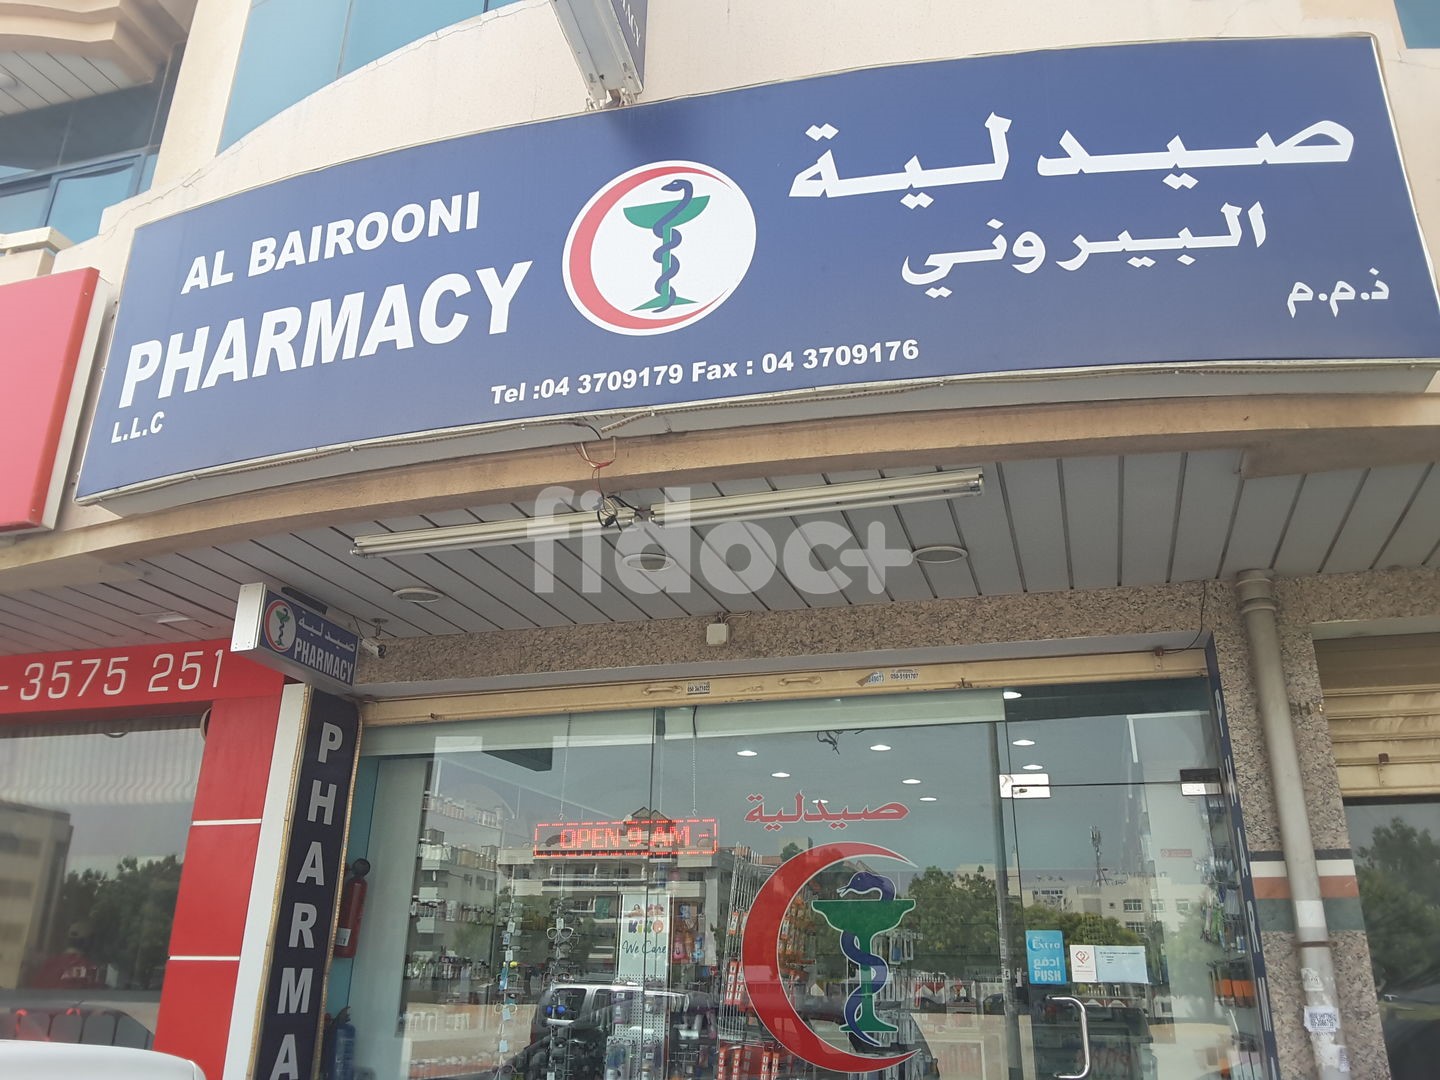 Al Bairooni Pharmacy, Dubai